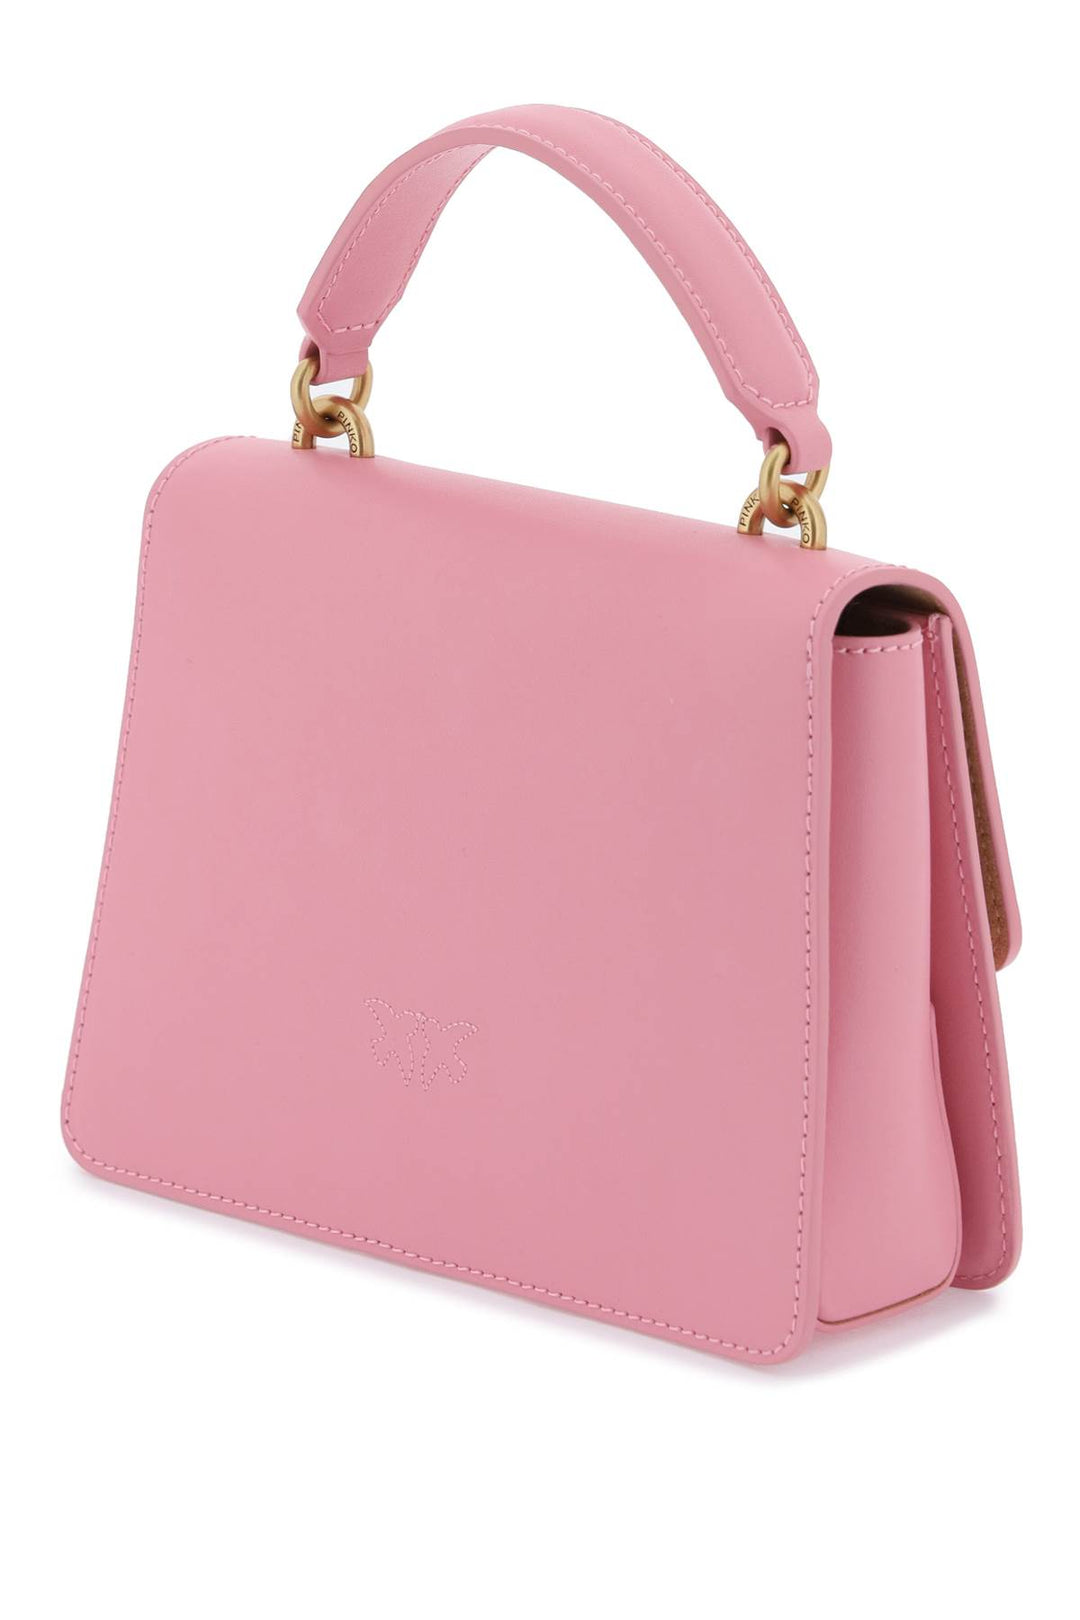 Pinko Love One Top Handle Mini Light Bag   Rosa